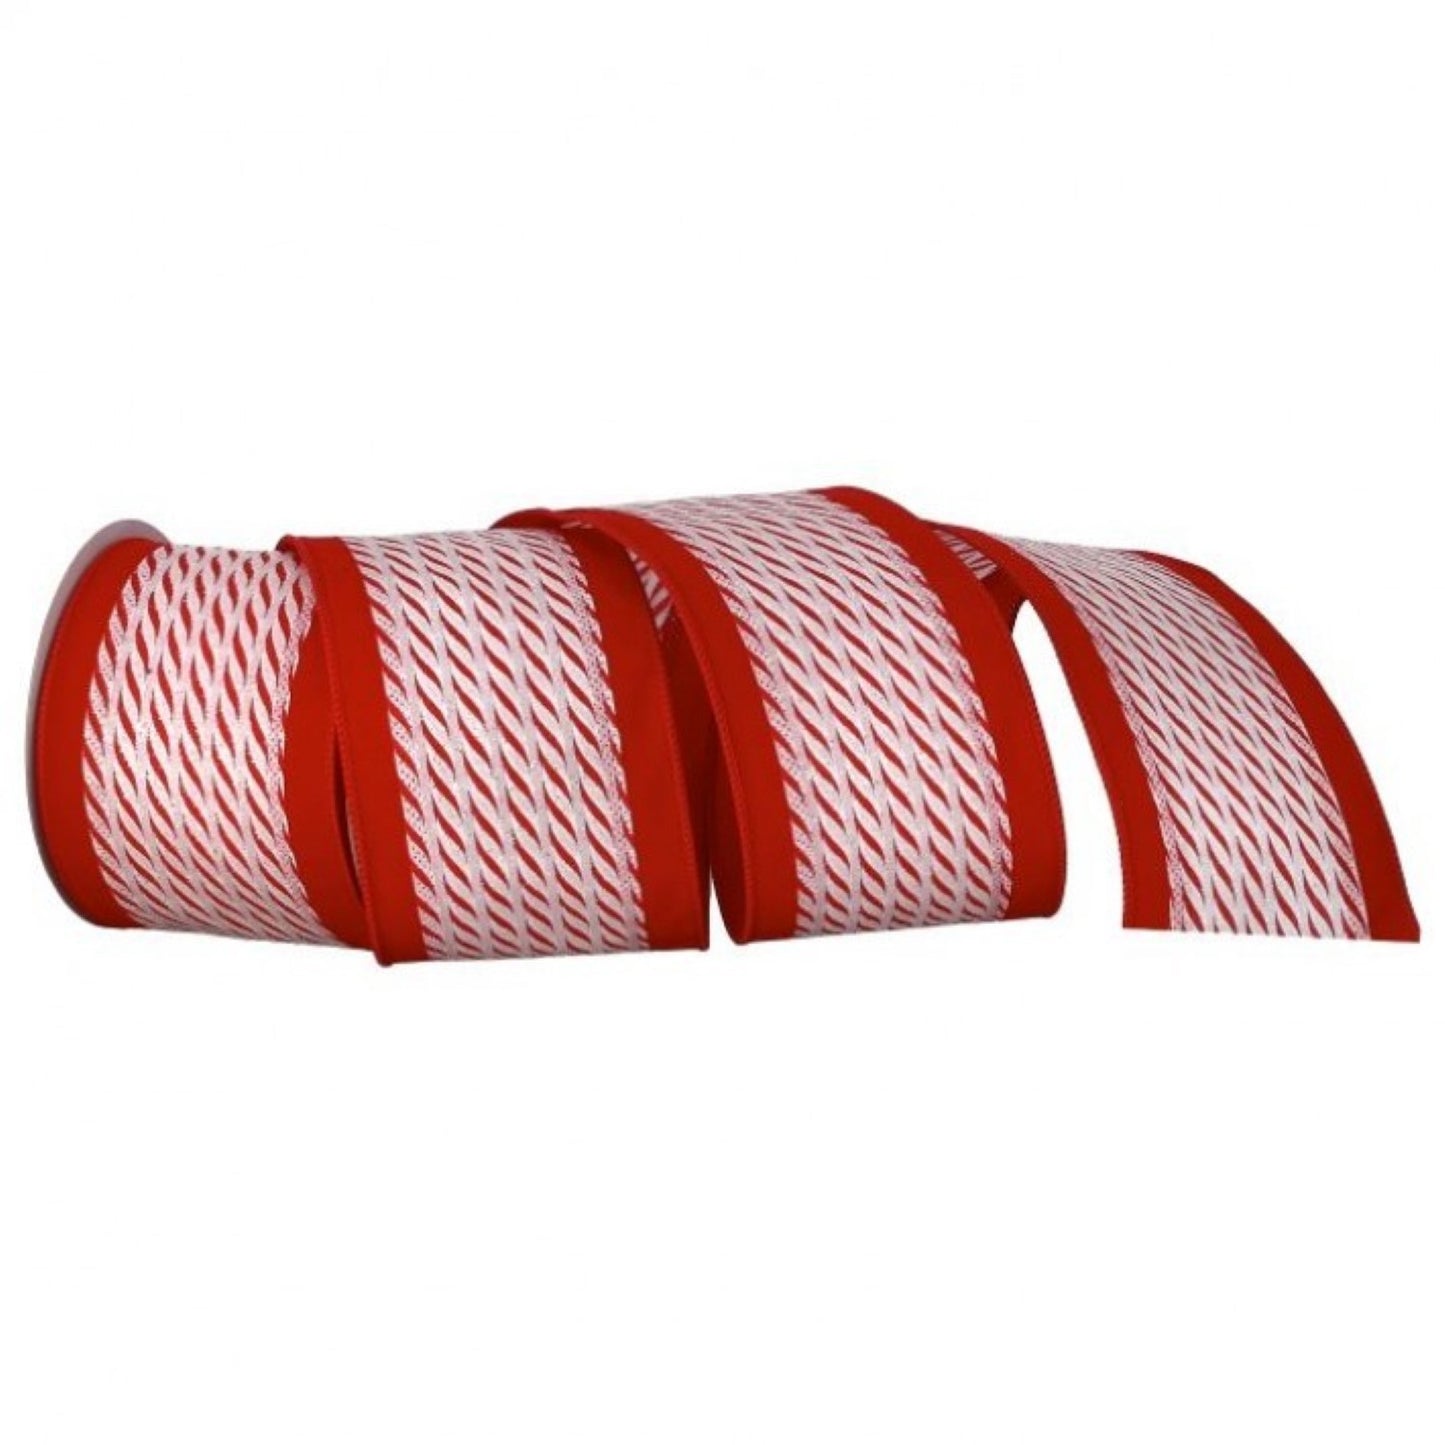 Regency International 4"X10Y Red Back/Peppermint Stick Ribbon